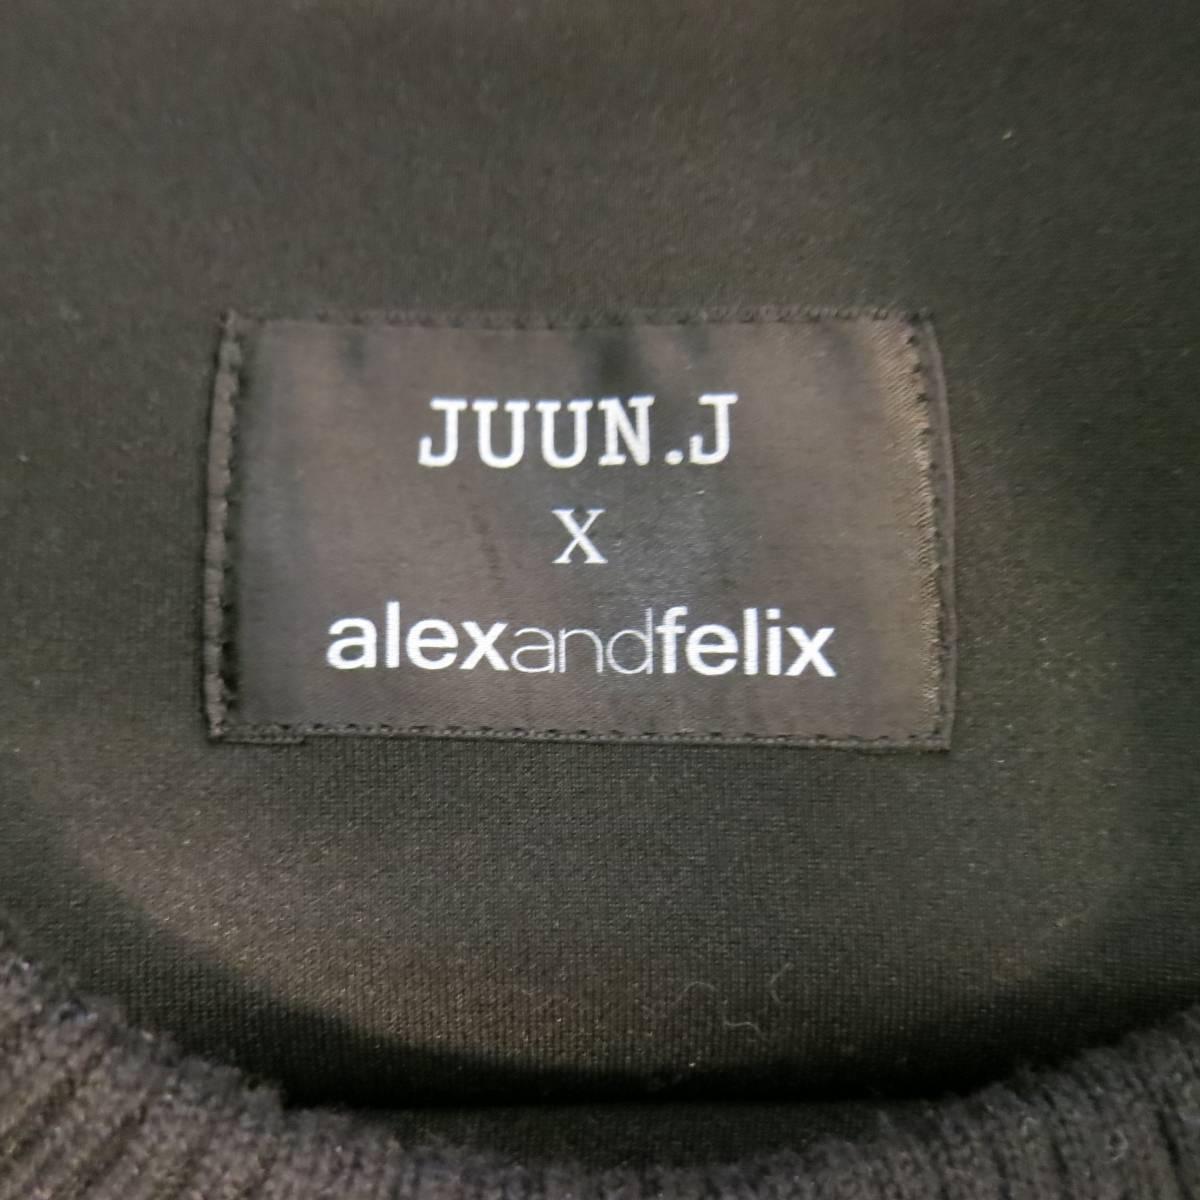 JUUN.J X Alex and Felix Size S Black Graphic Print Neoprene Sweatshirt 2012 6